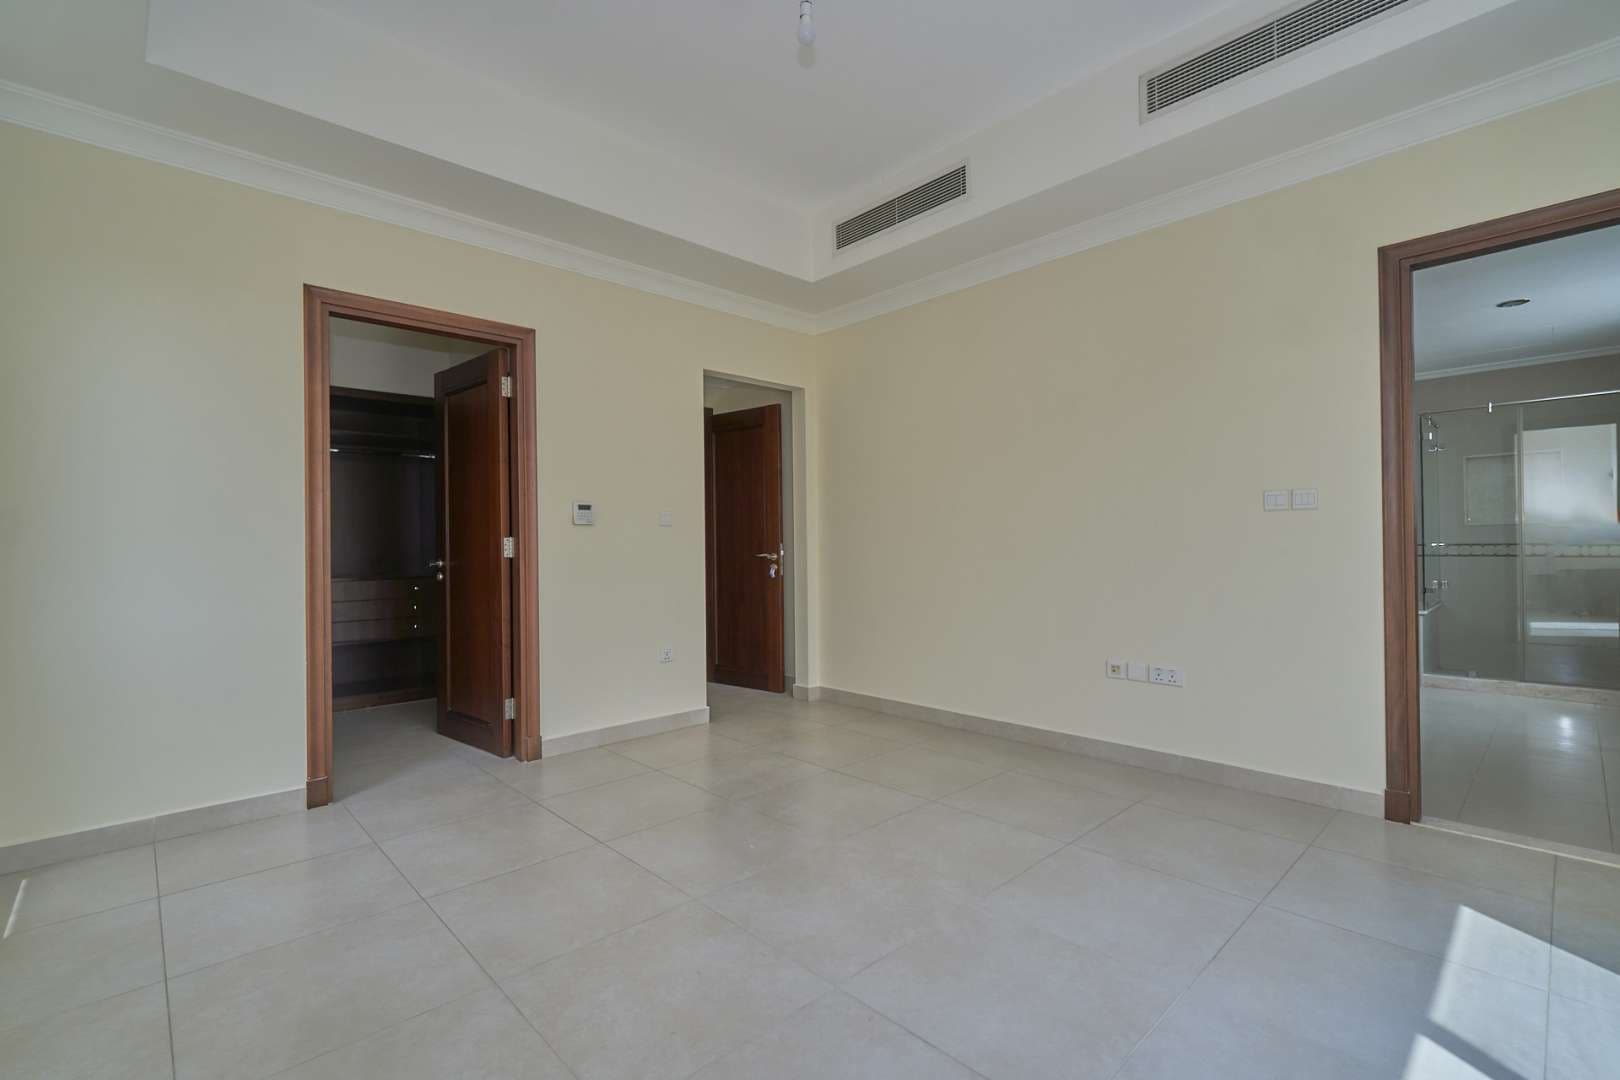 3 Bedroom Villa For Rent Palma Lp07425 2f7ed6eedbb80400.jpg